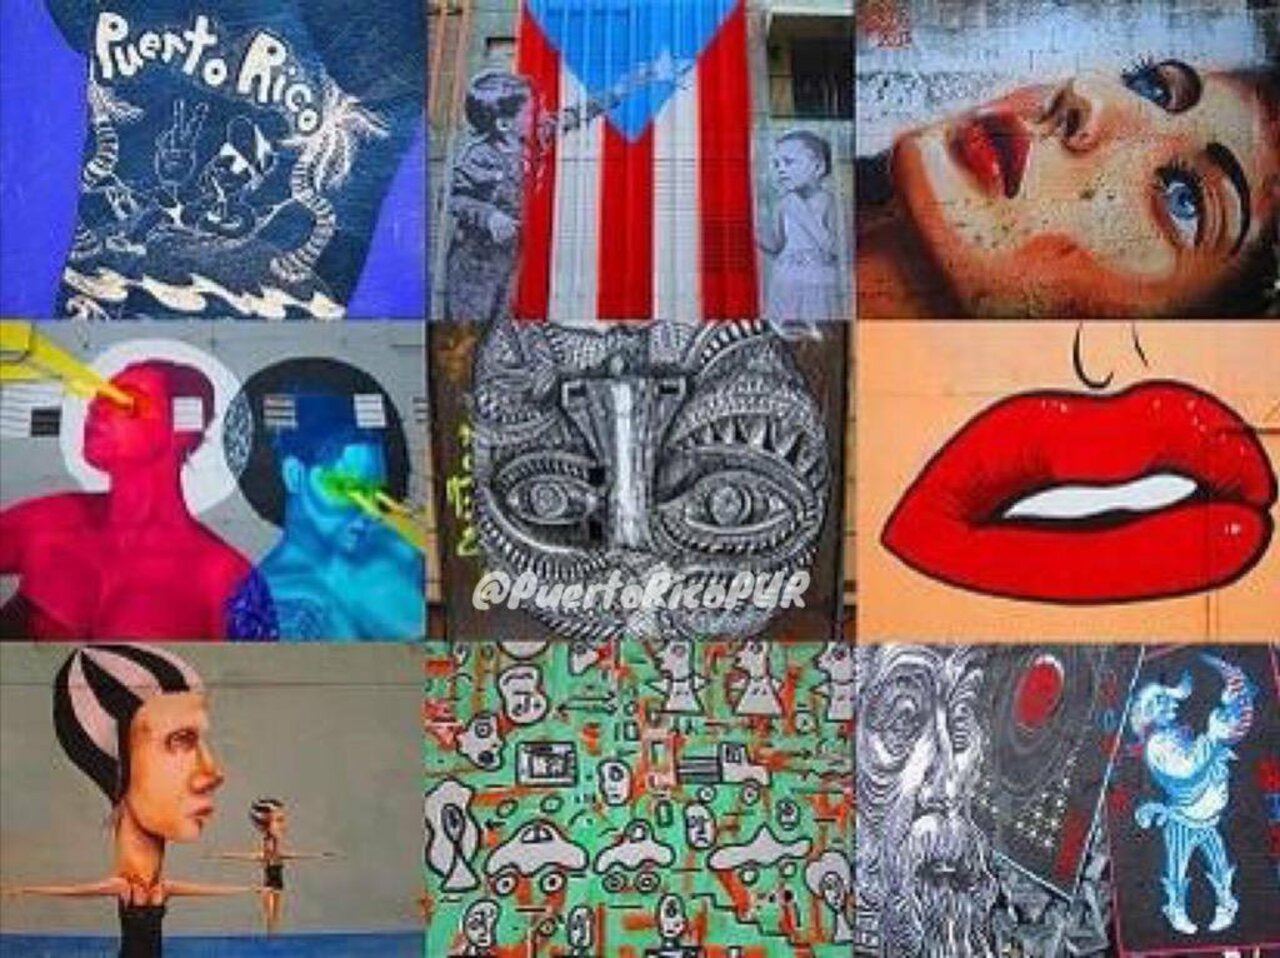 Street art in Santurce! @PuertoRicoPUR #StreetArt #travel https://t.co/02tDxpBeqd